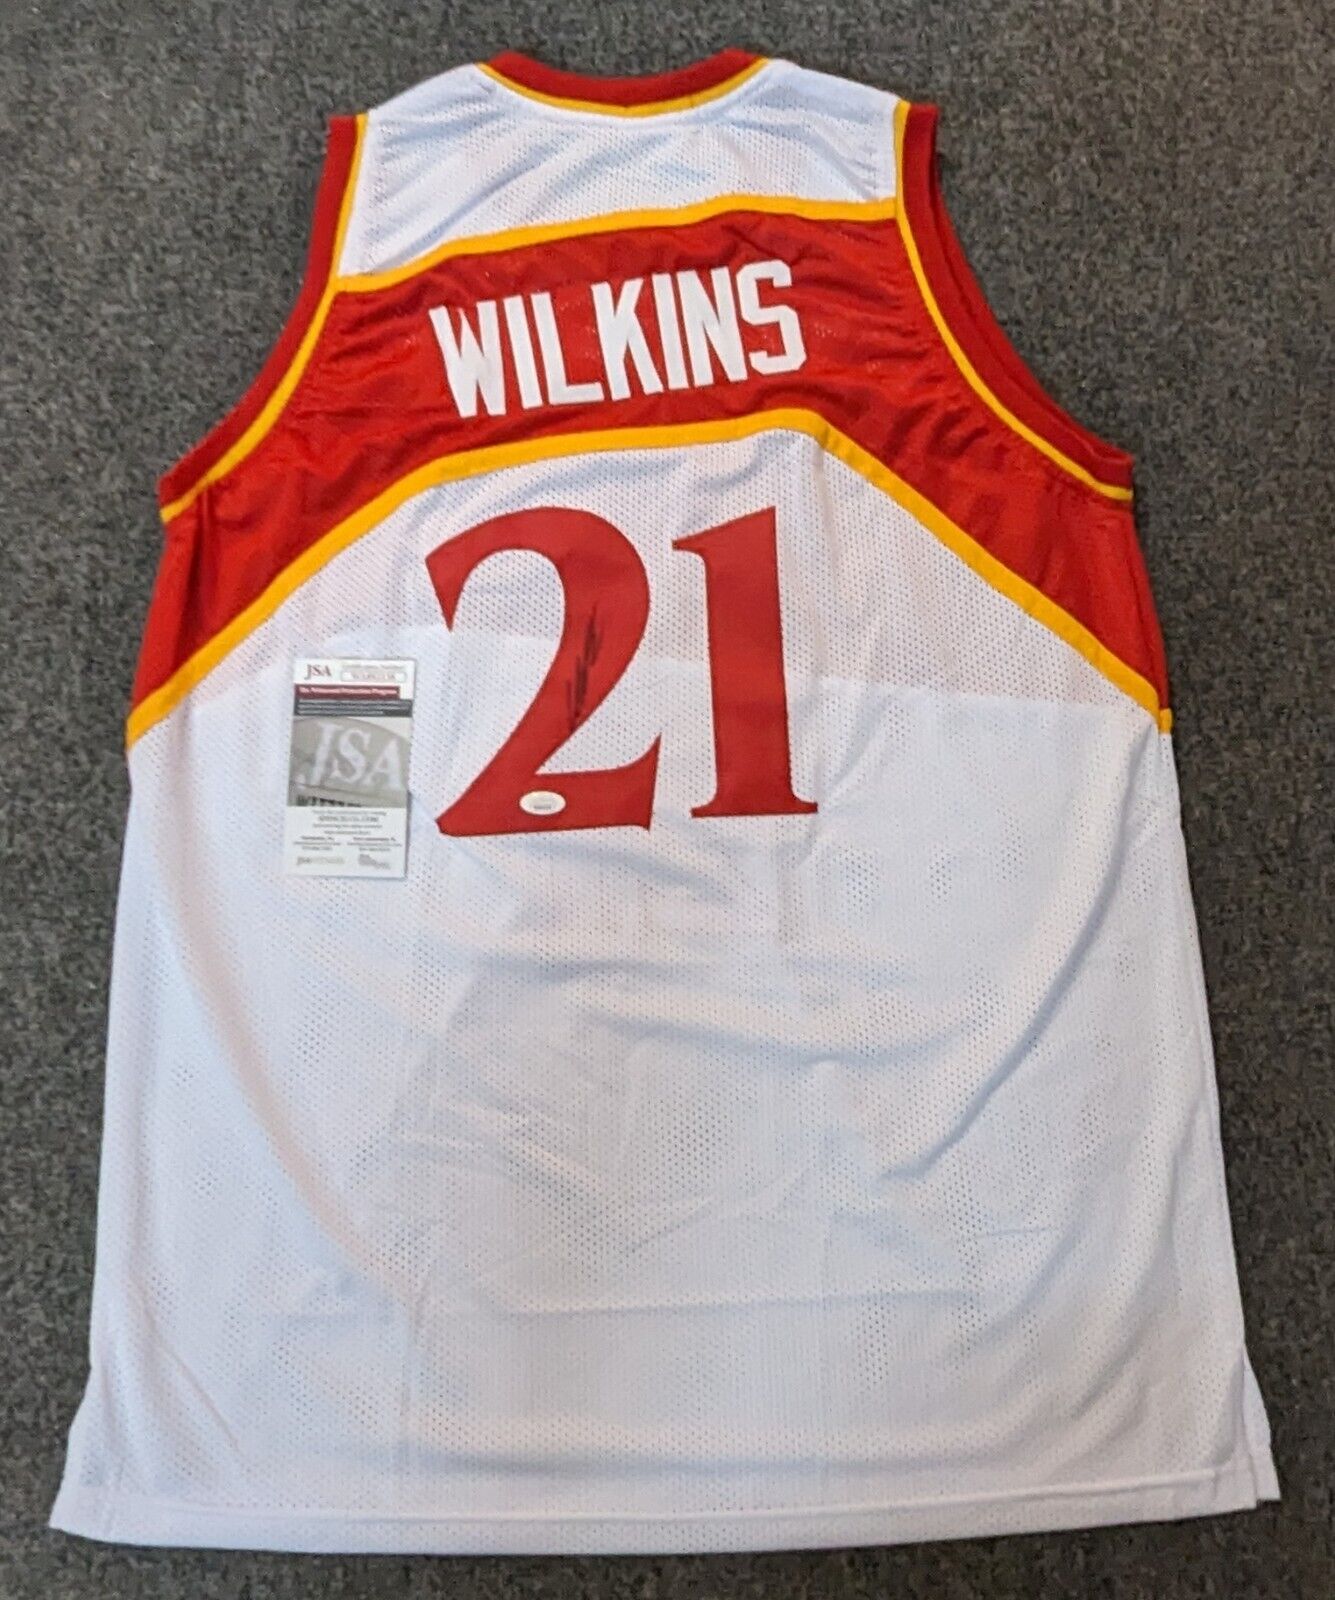 MVP Authentics Atlanta Hawks Dominique Wilkins Autographed Signed Jersey Jsa Coa 112.50 sports jersey framing , jersey framing